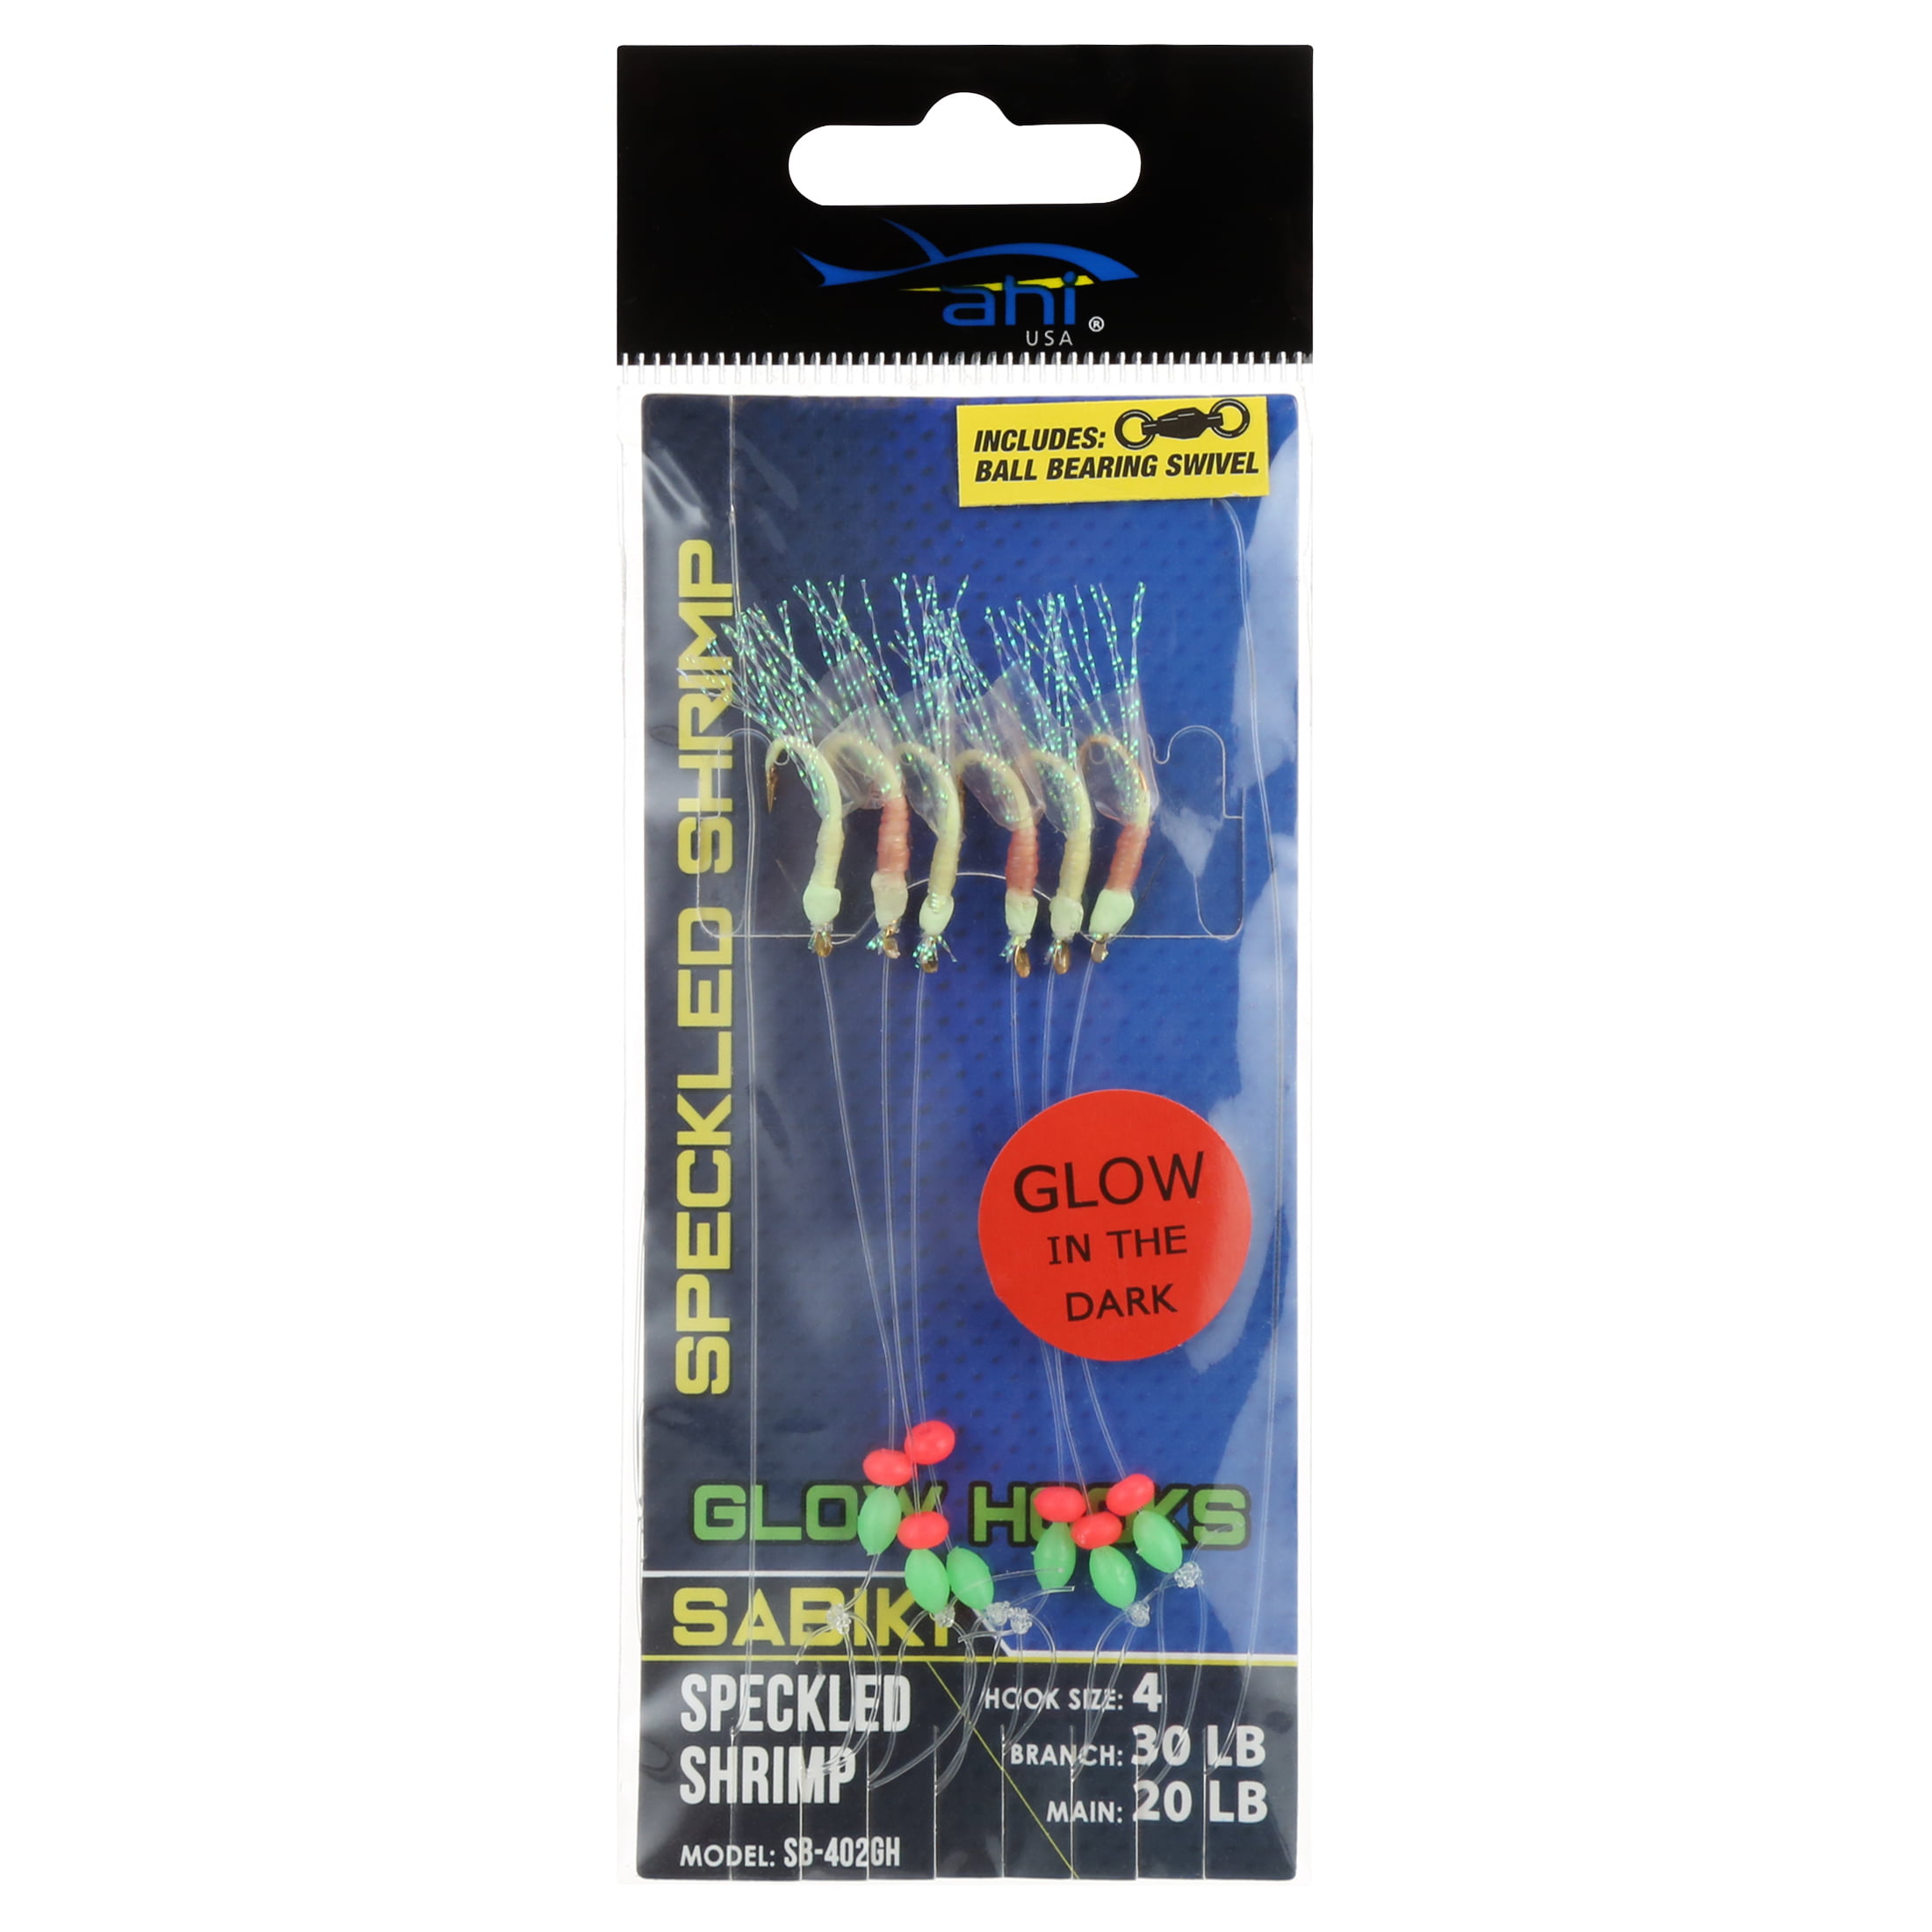 Sabiki Rigs Shrimp Multi Color By Eagle Claw Lazer Sharp L945